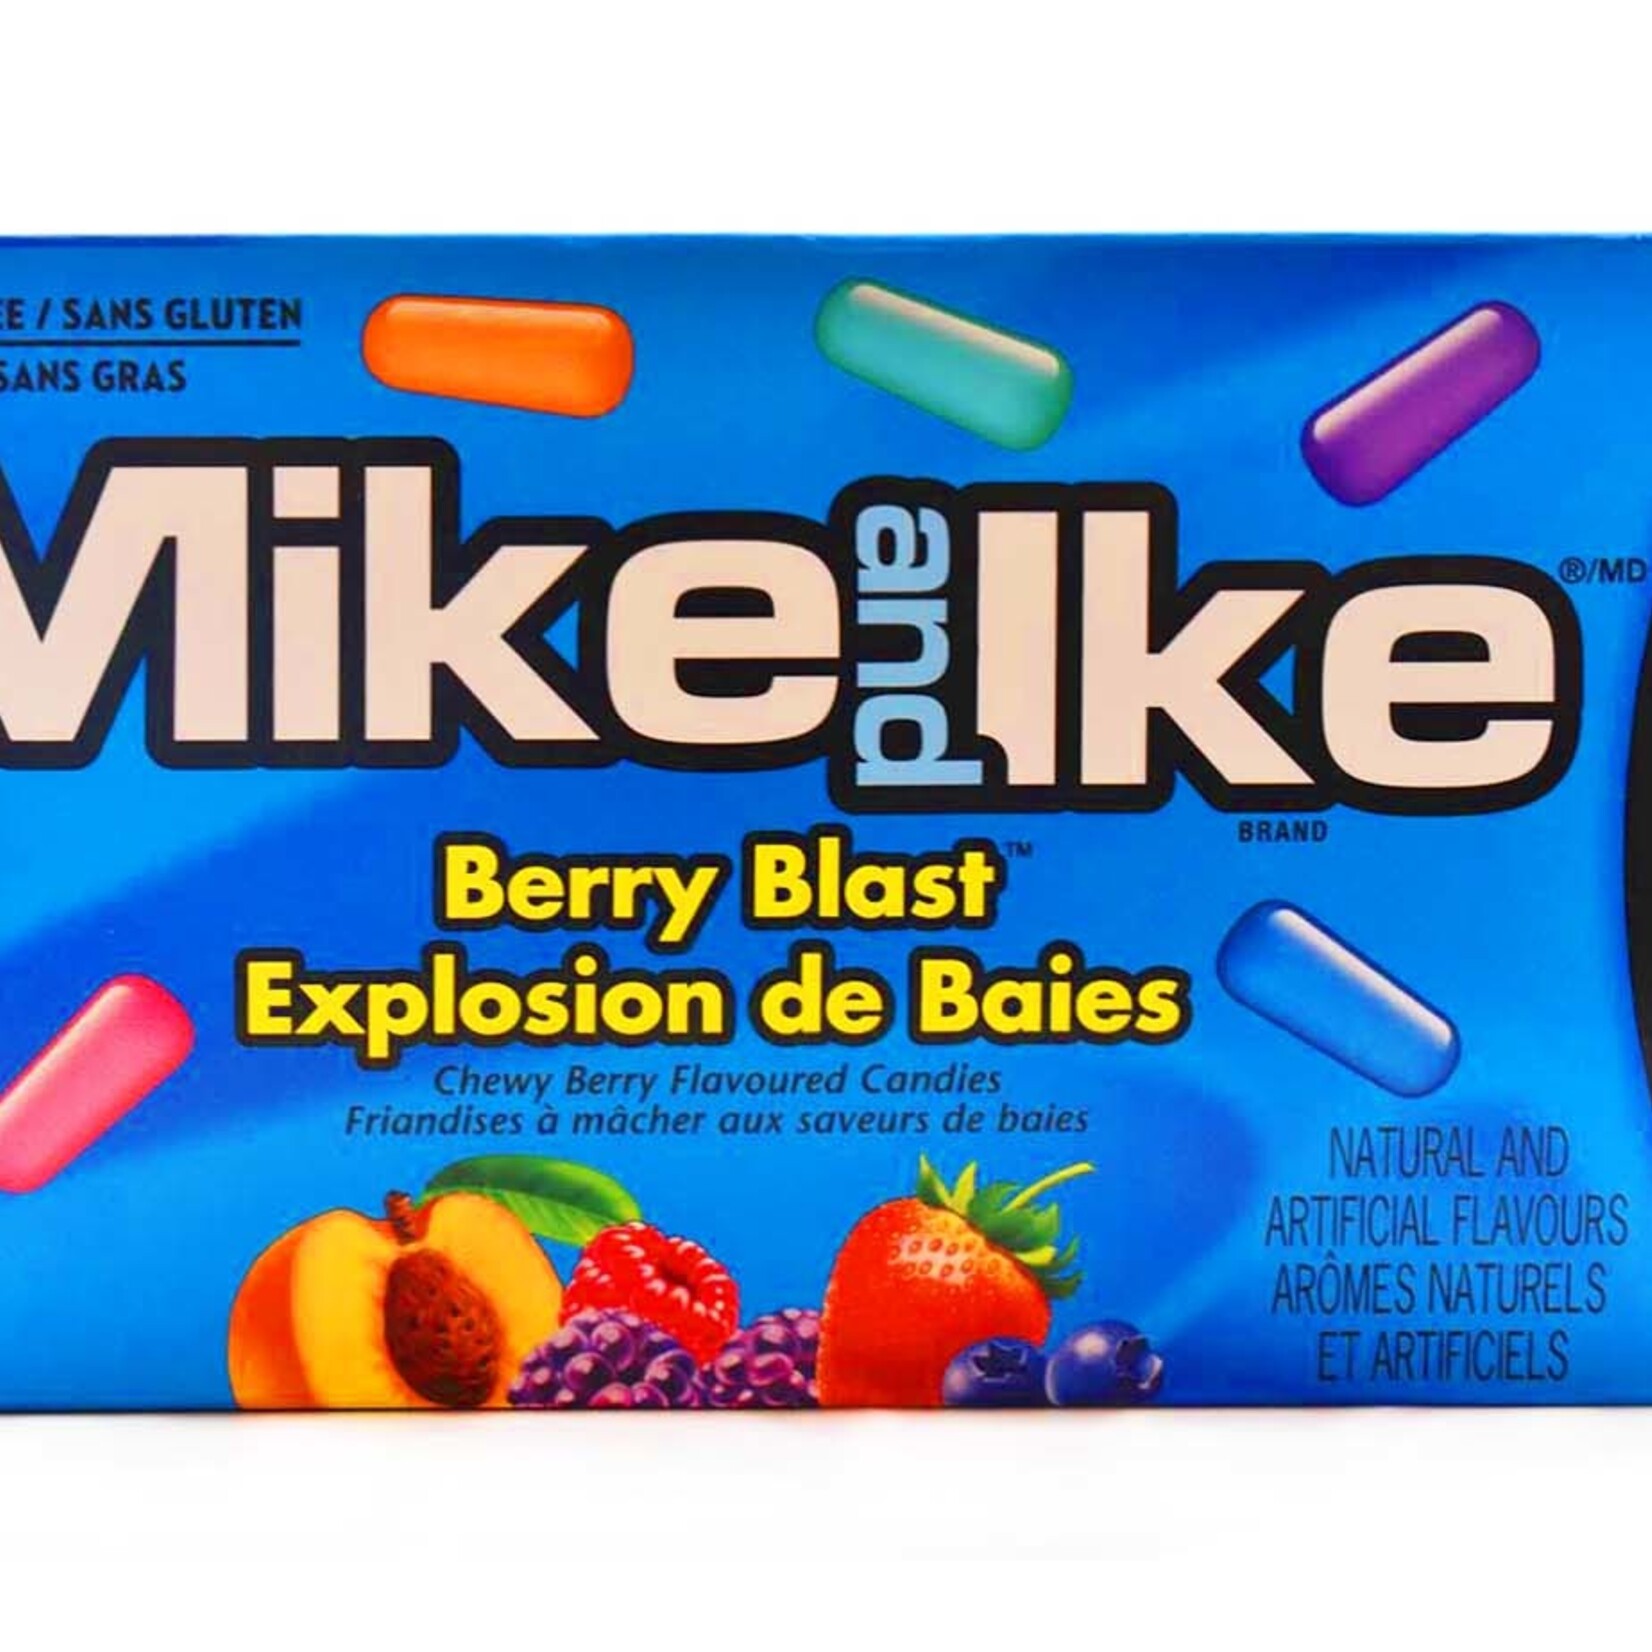 mike and ike Mike & Ike Berry Blast